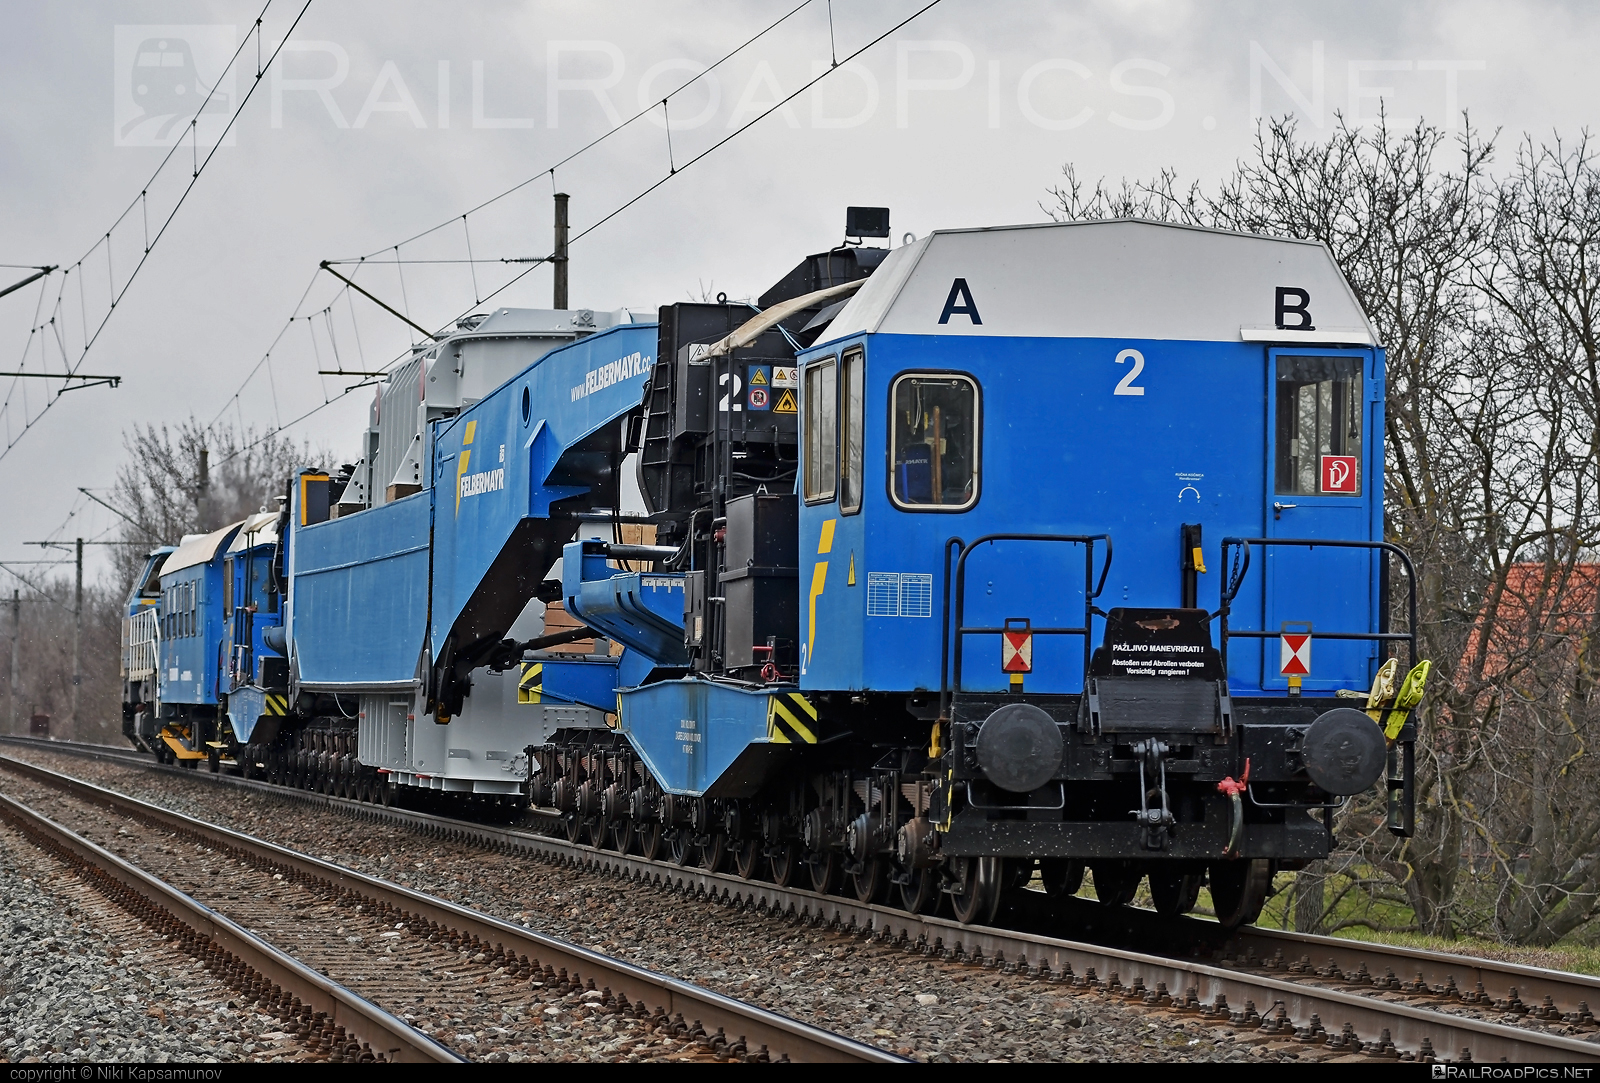 Class U - Uaai - 9964 900-5 operated by Felbermayr Transport- und Hebetechnik GmbH & Co KG #FelbermayrTransportUndHebetechnik #felbermayr #uaai